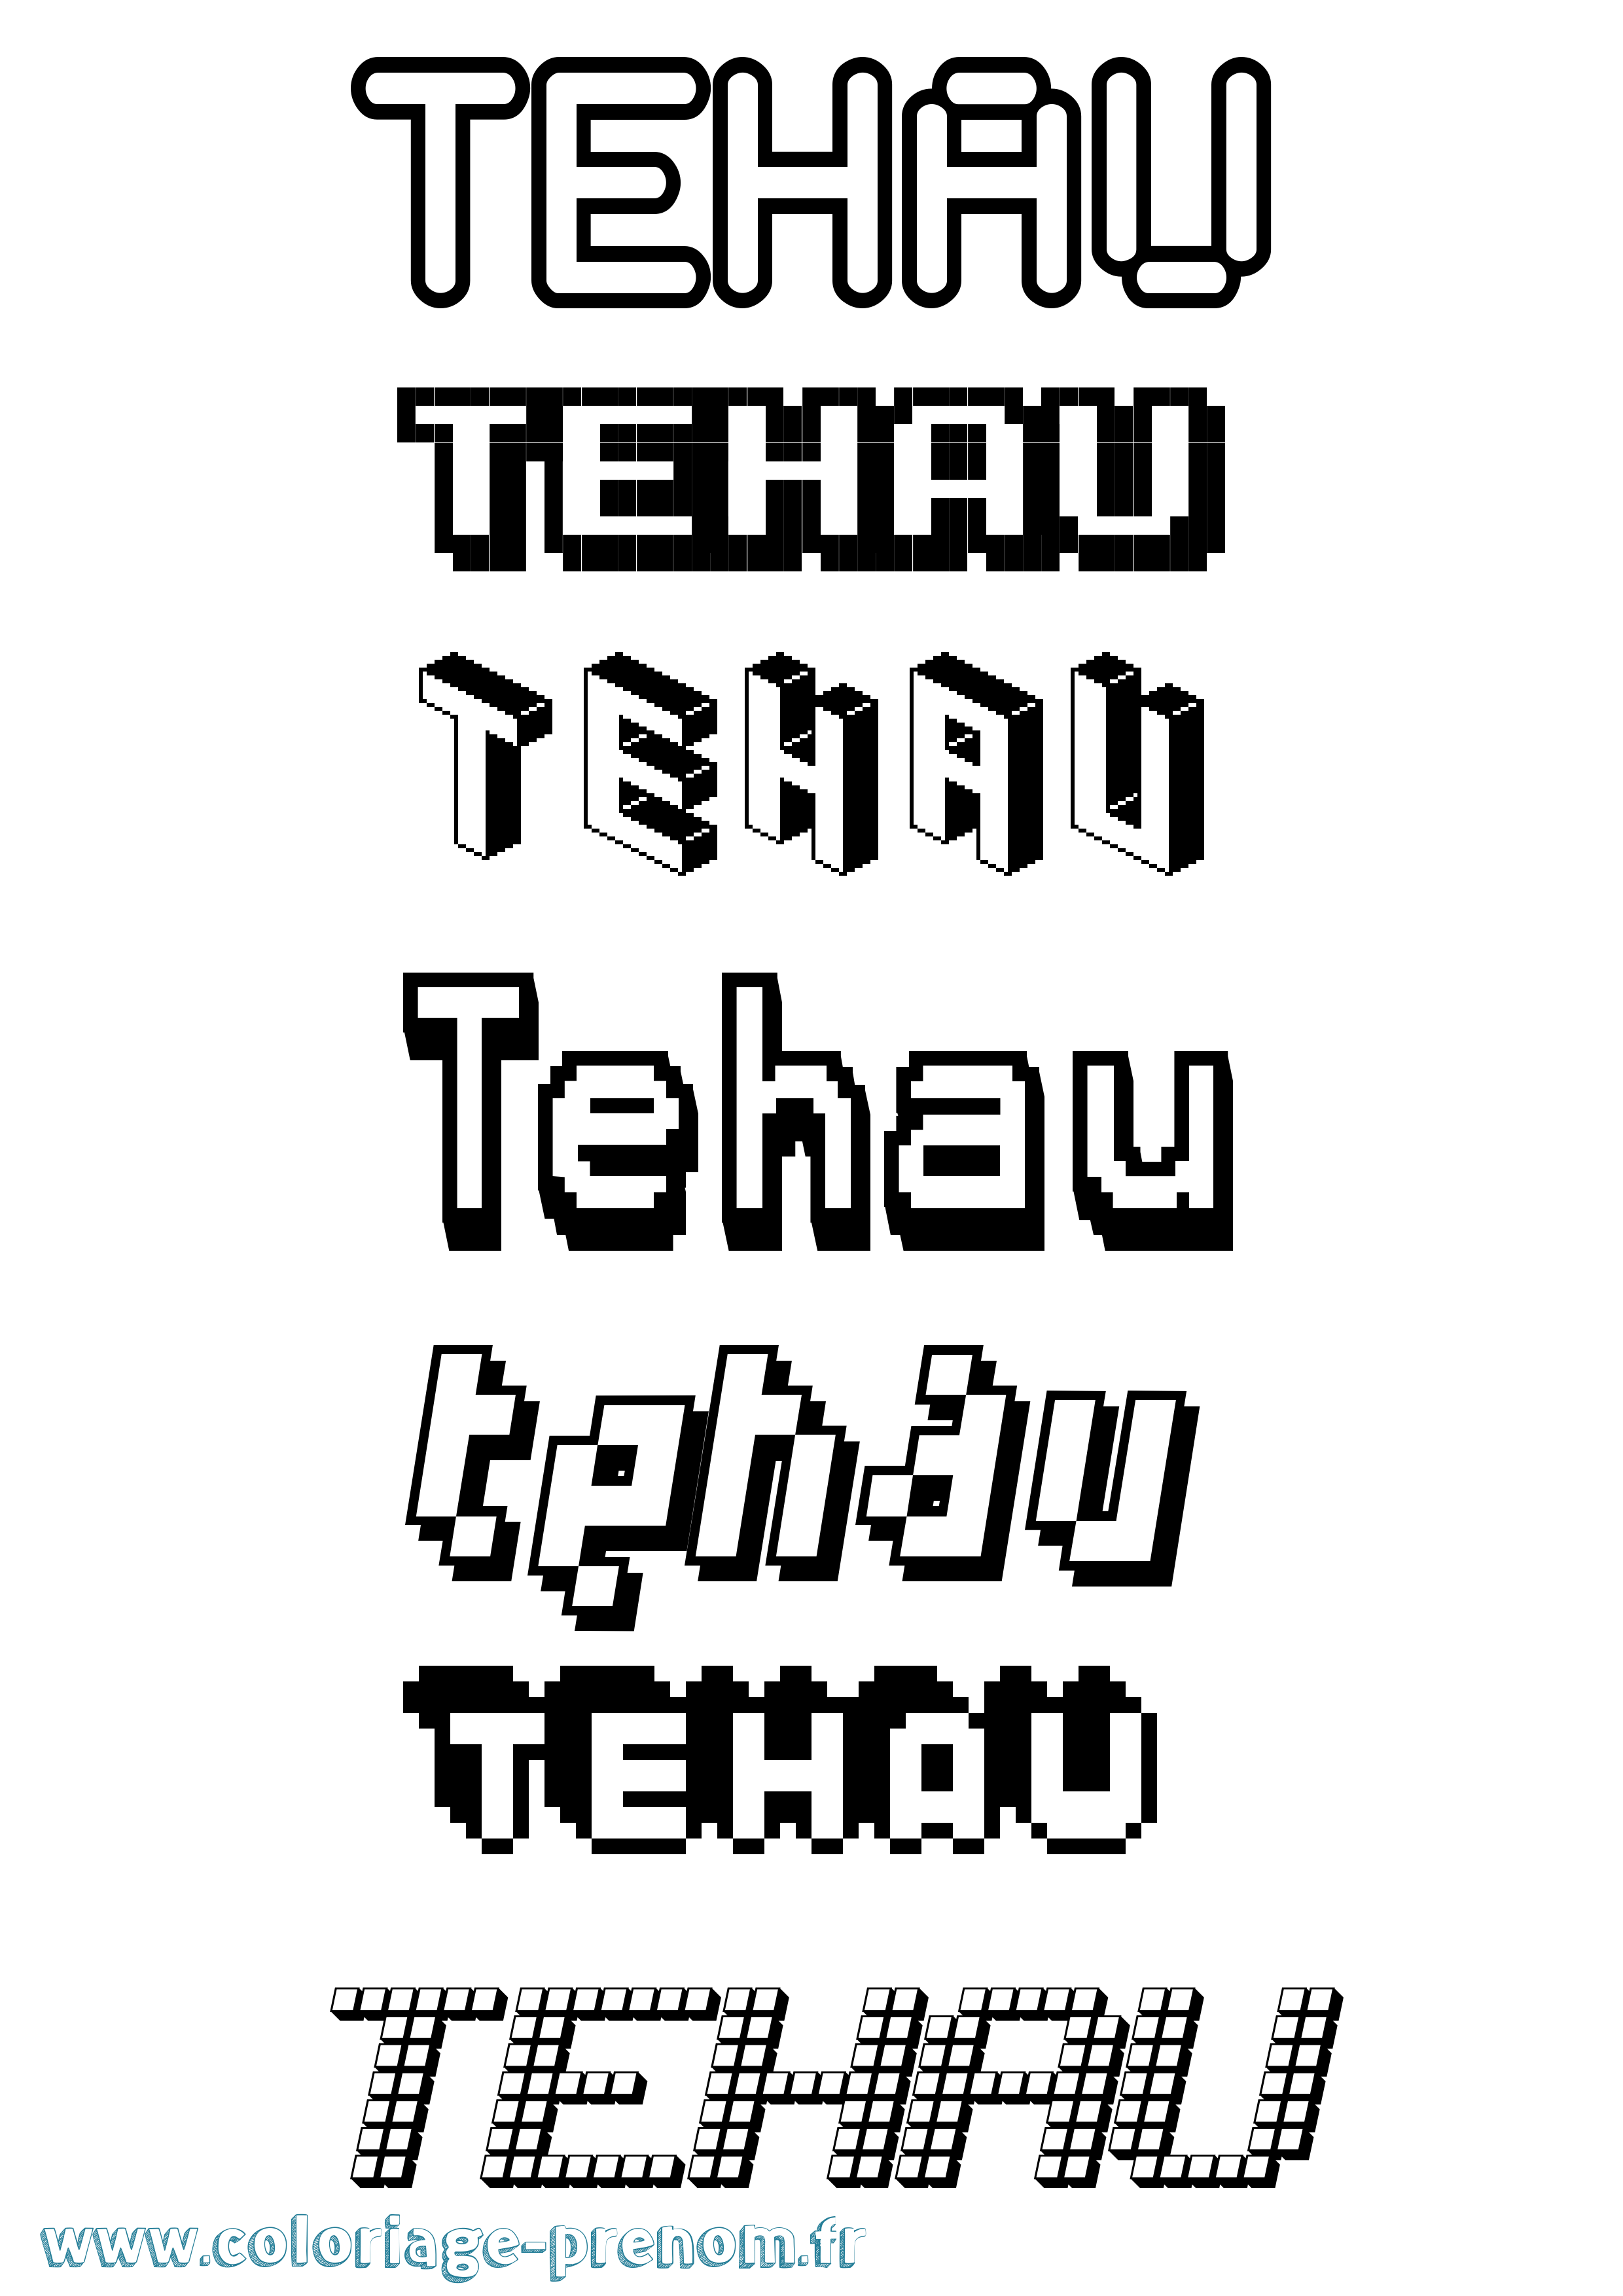 Coloriage prénom Tehau Pixel